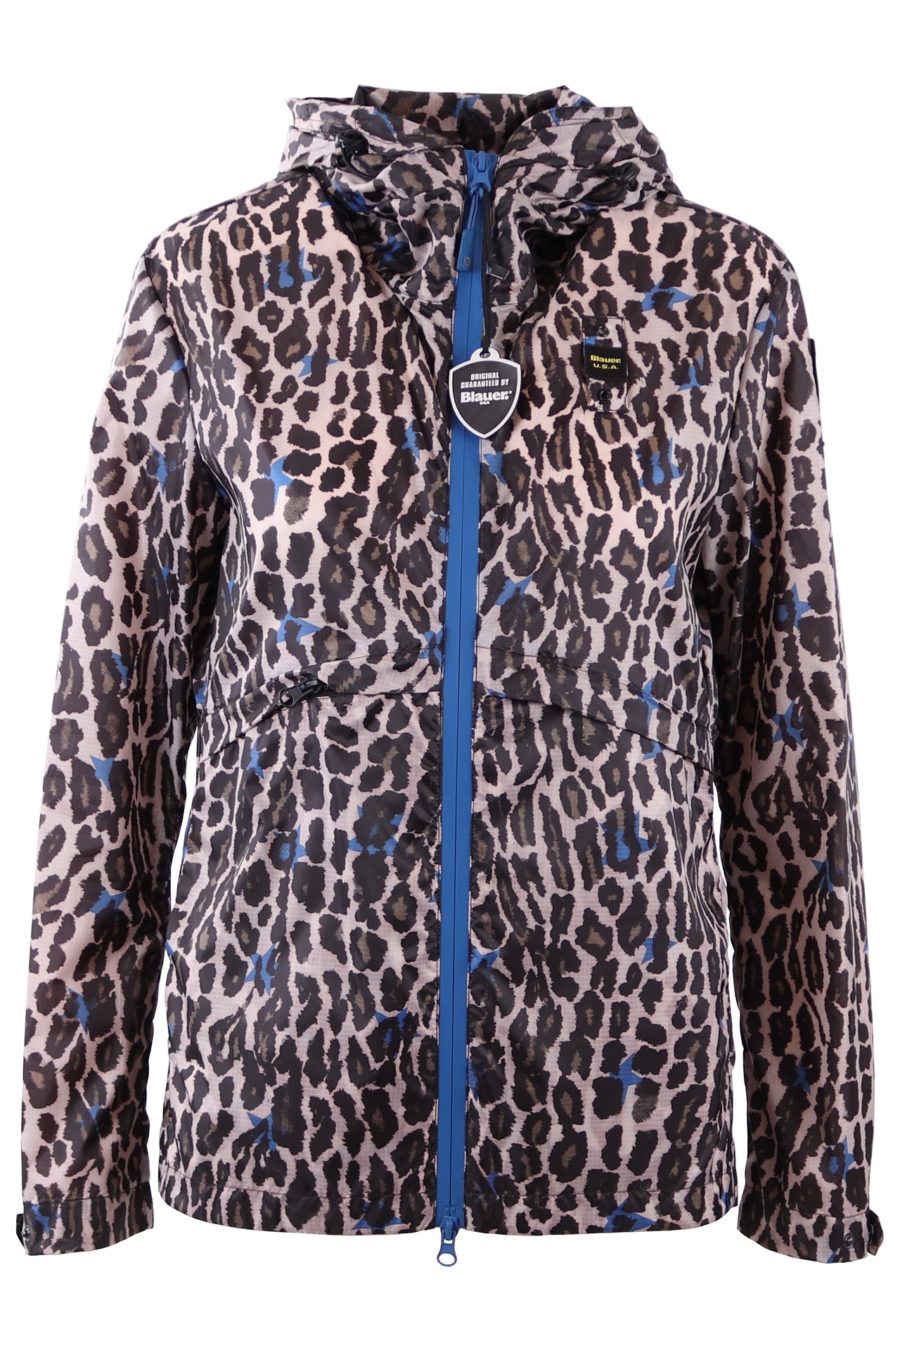 Leopard print jacket Blauer - 9db096d0bdffdf875446e4f5d7fe86ea22302b0b